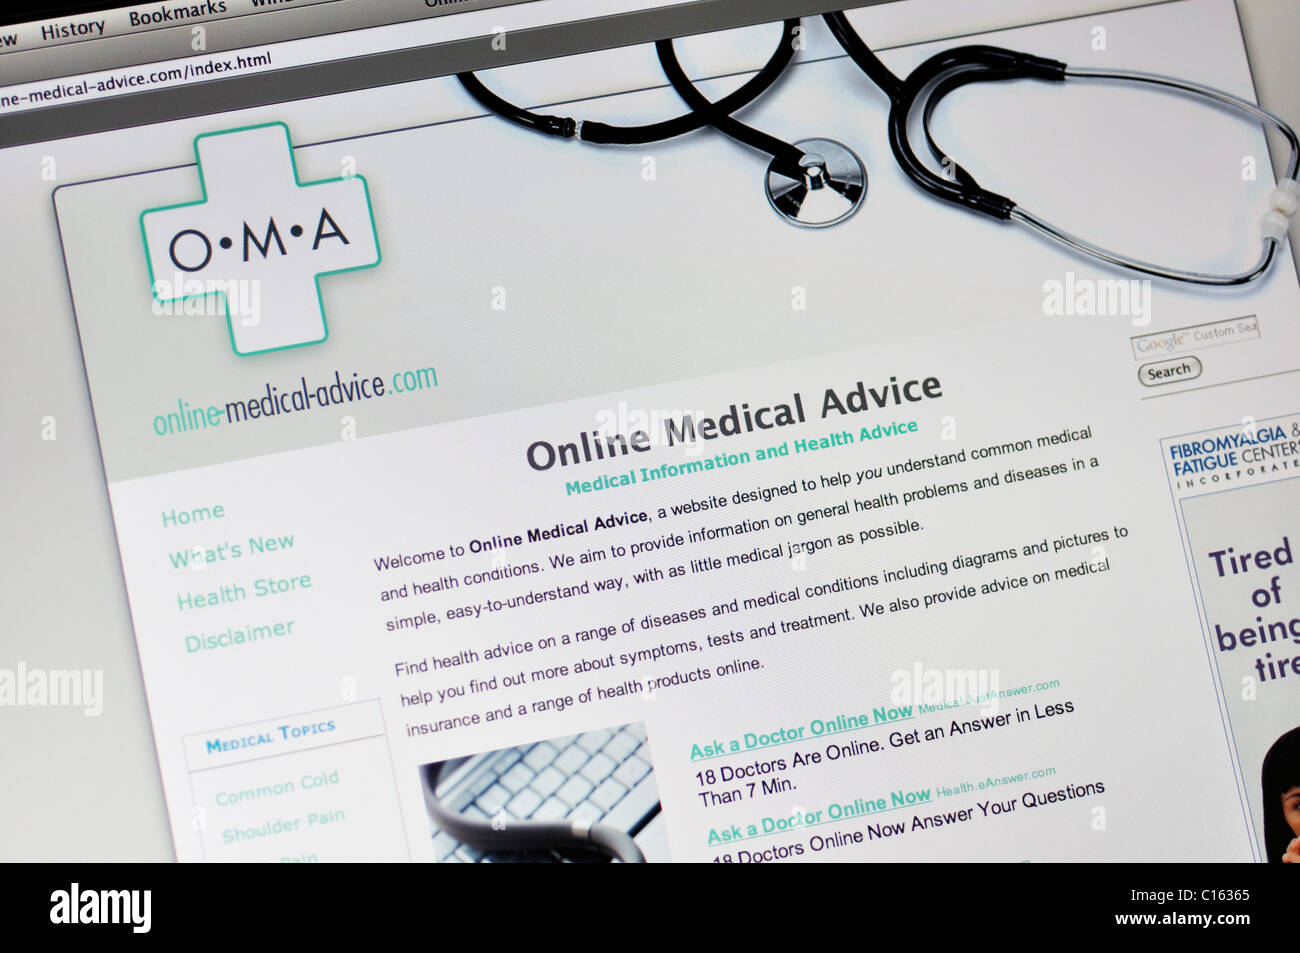 Online Medical Advice website Stock Photo